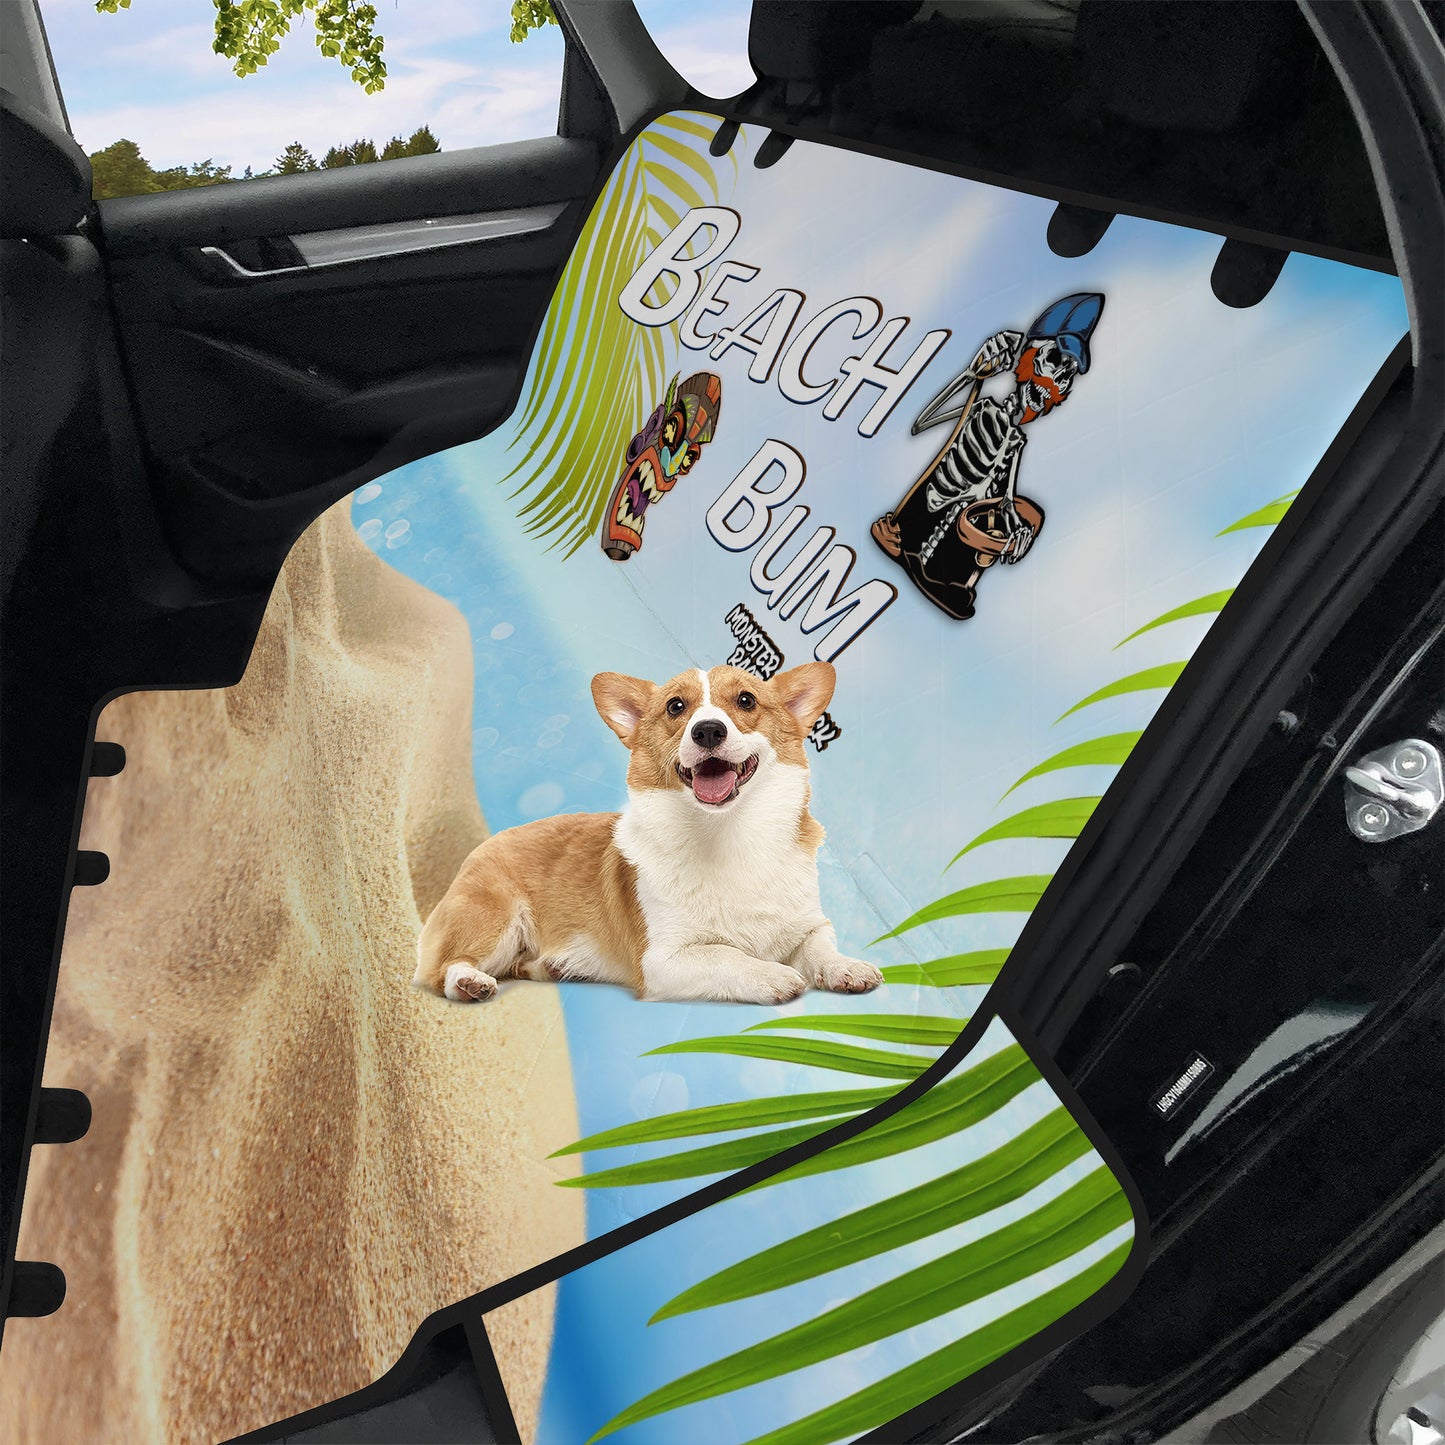 Beach Bum Car Pet Seat Covers